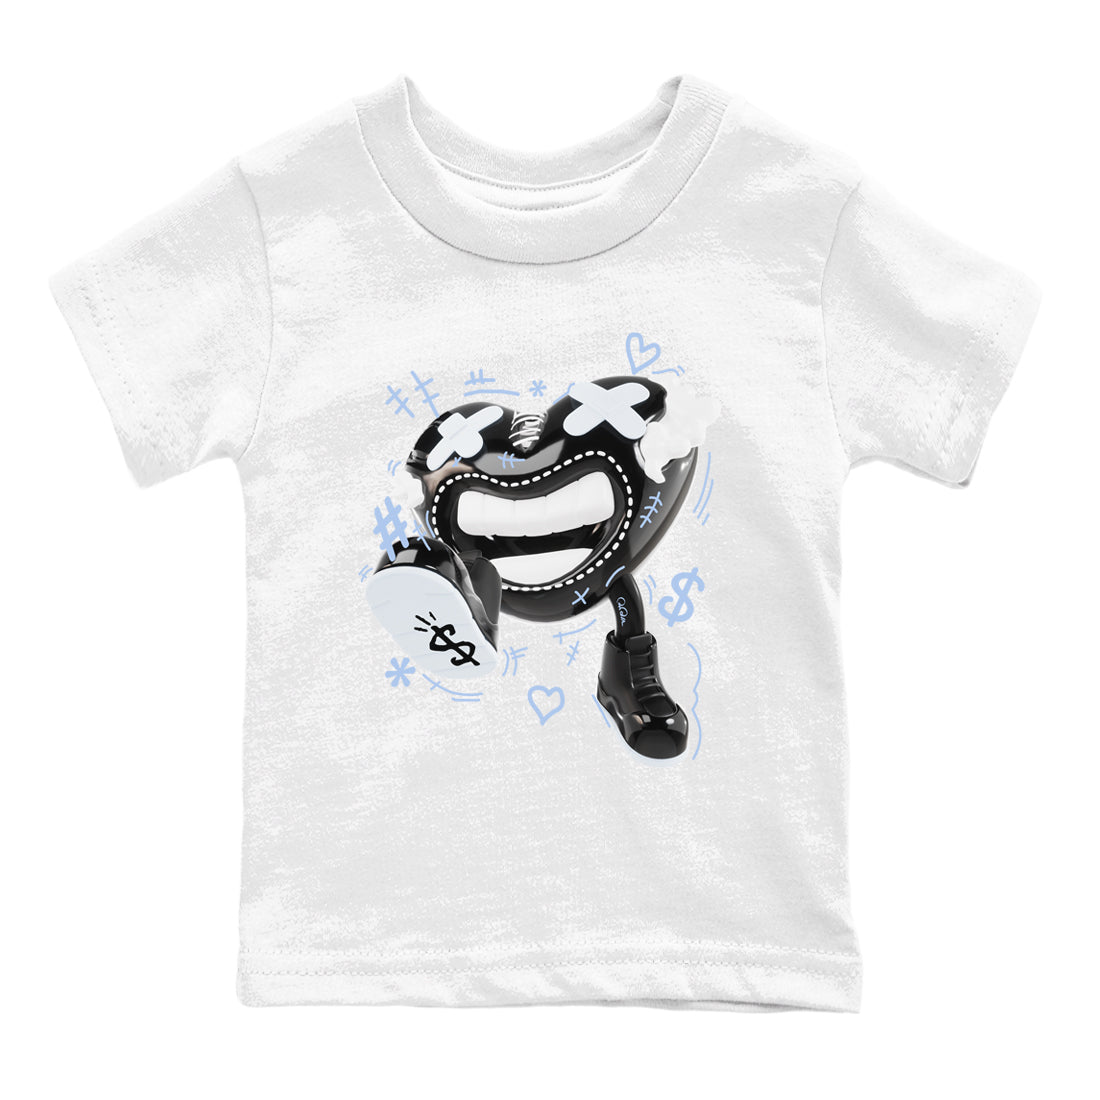 11s Space Jam shirt to match jordans Walk In Love sneaker tees Air Jordan 11 Space Jam SNRT Sneaker Release Tees Baby Toddler White 2 T-Shirt